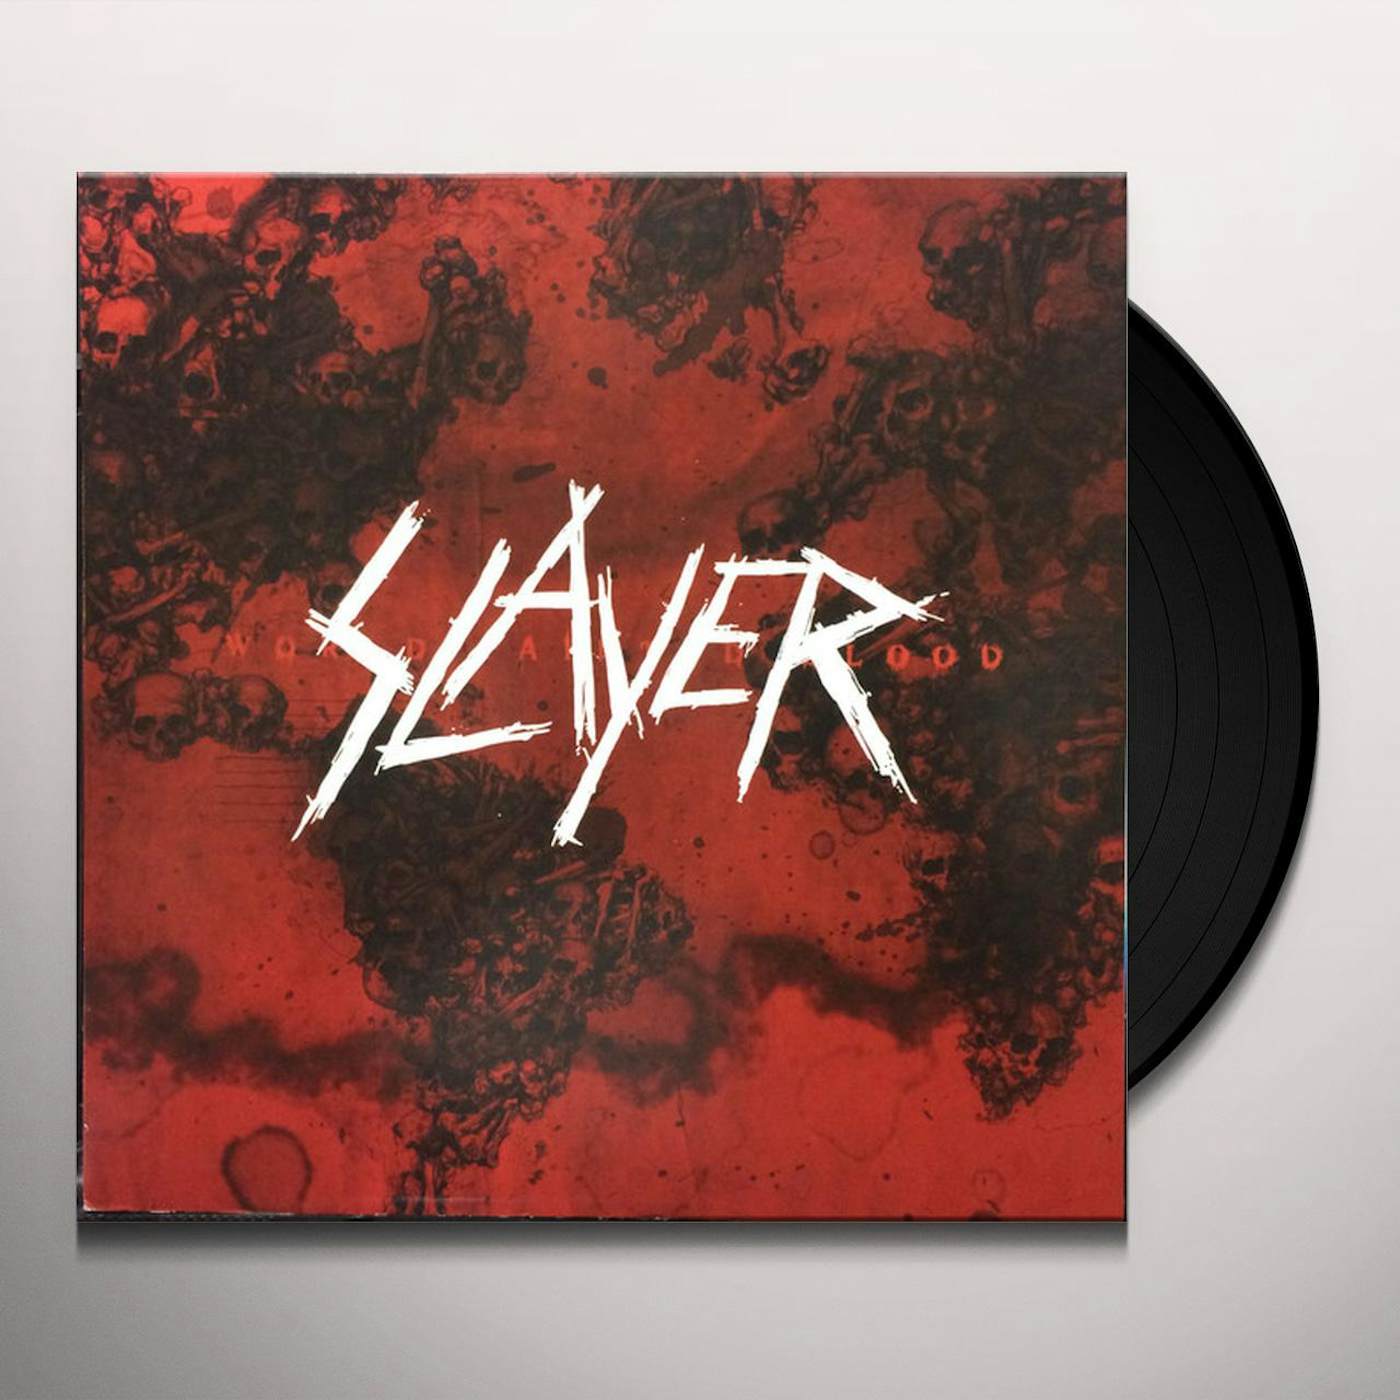 SLAYER - South Of Heaven (Vinilo, LP, Album) 1988 